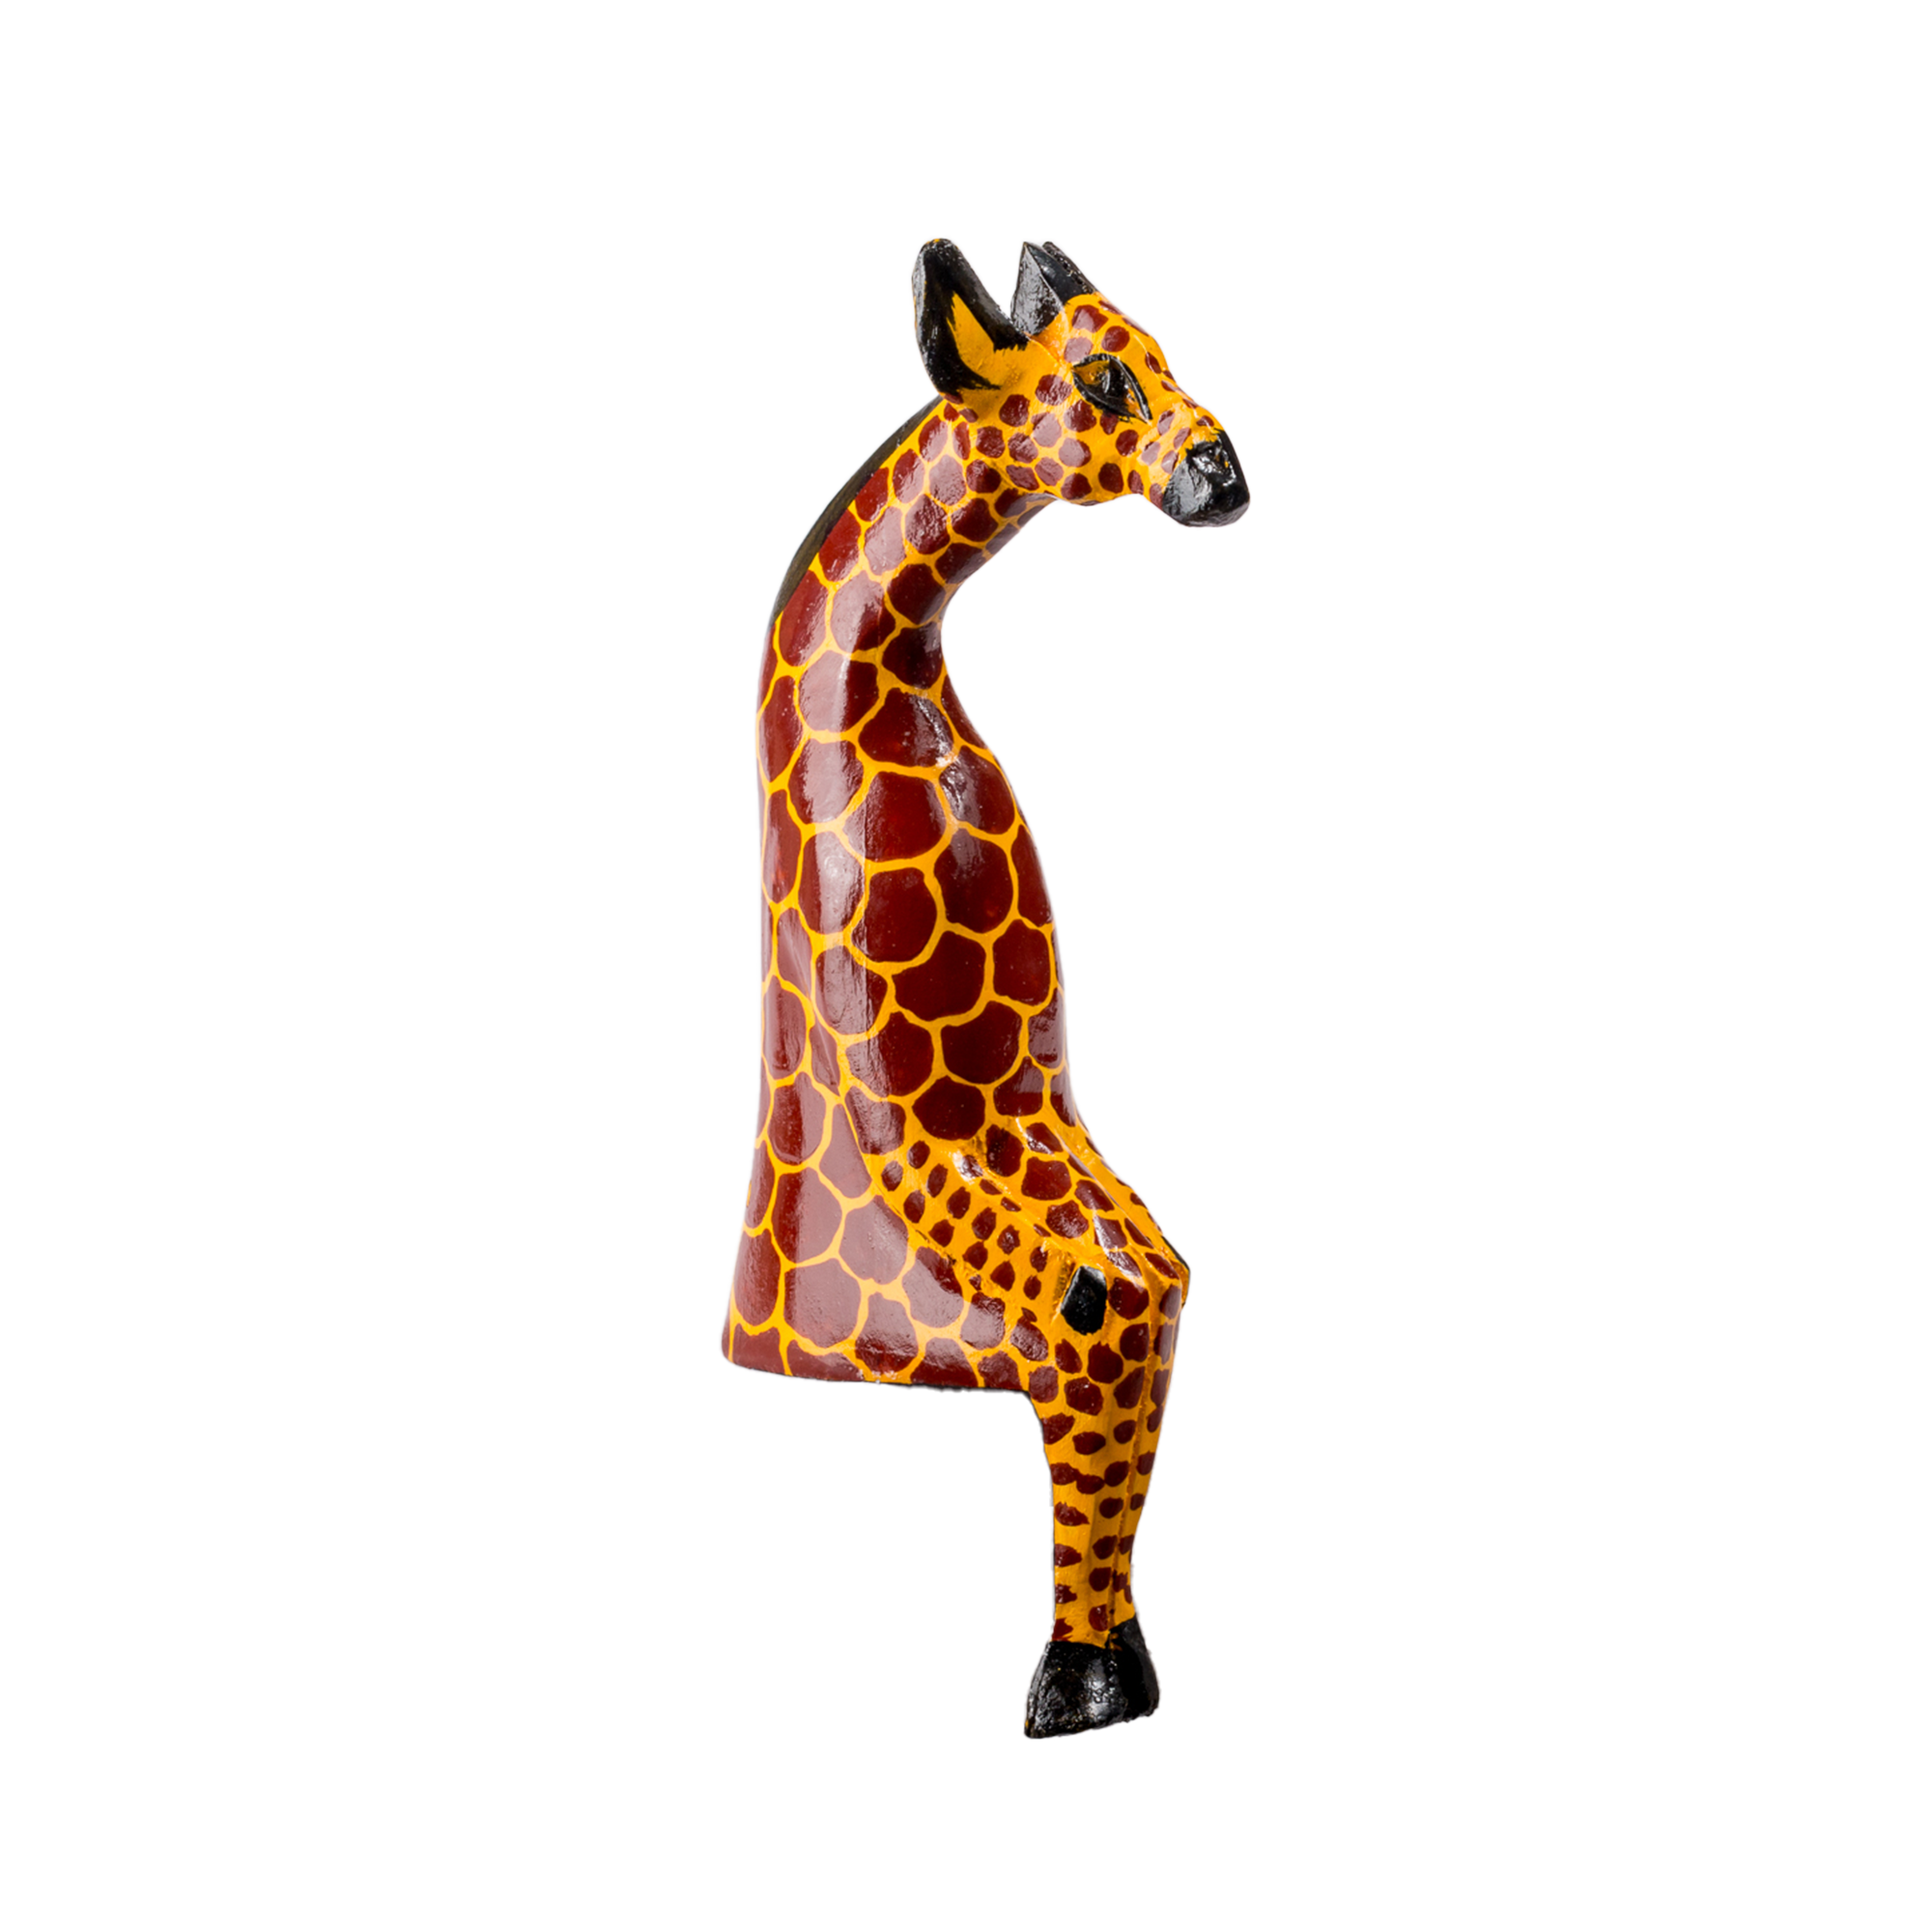 Wood Carved Seated Giraffe